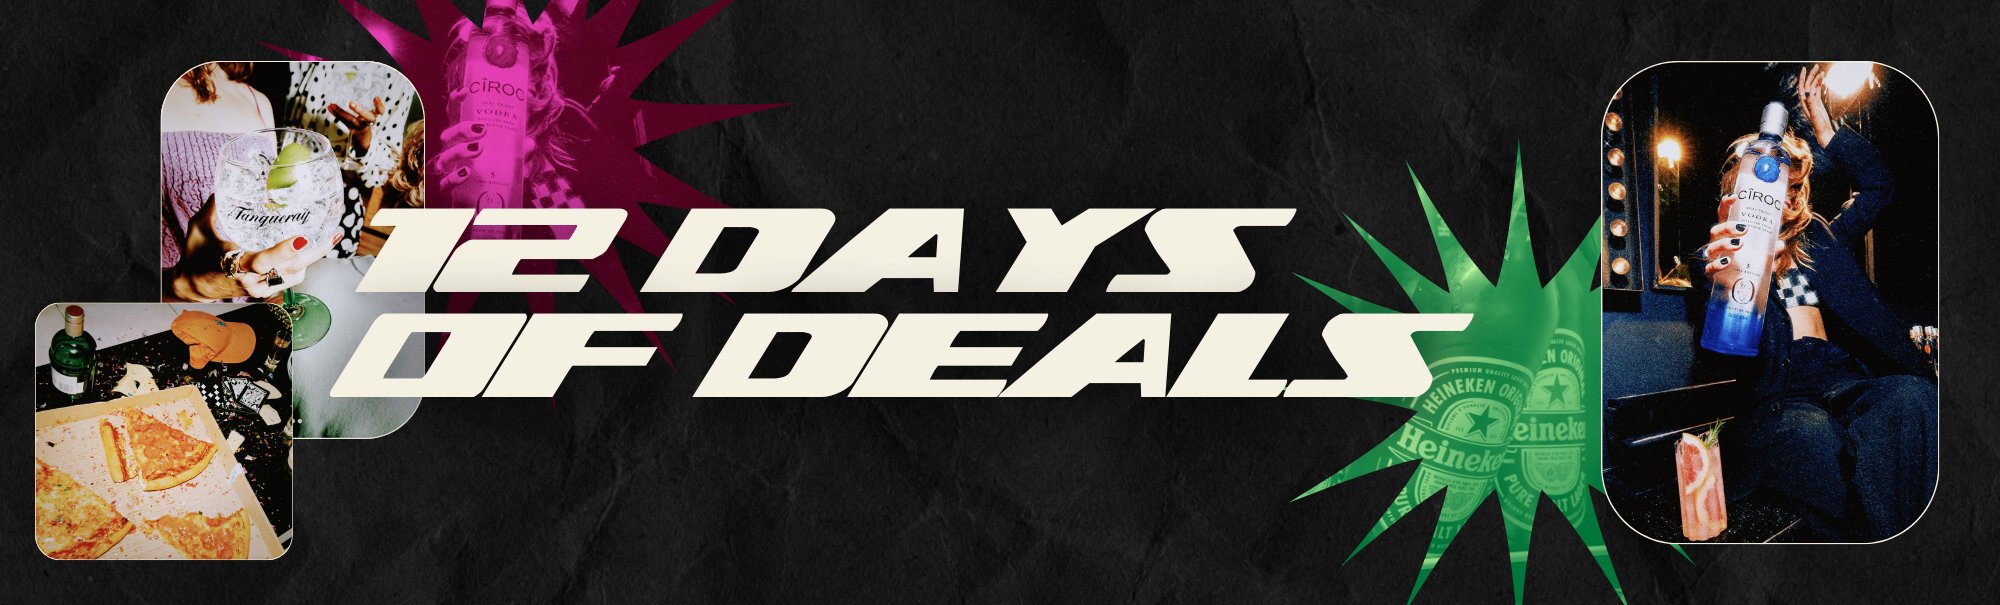 12 Days of Deals.